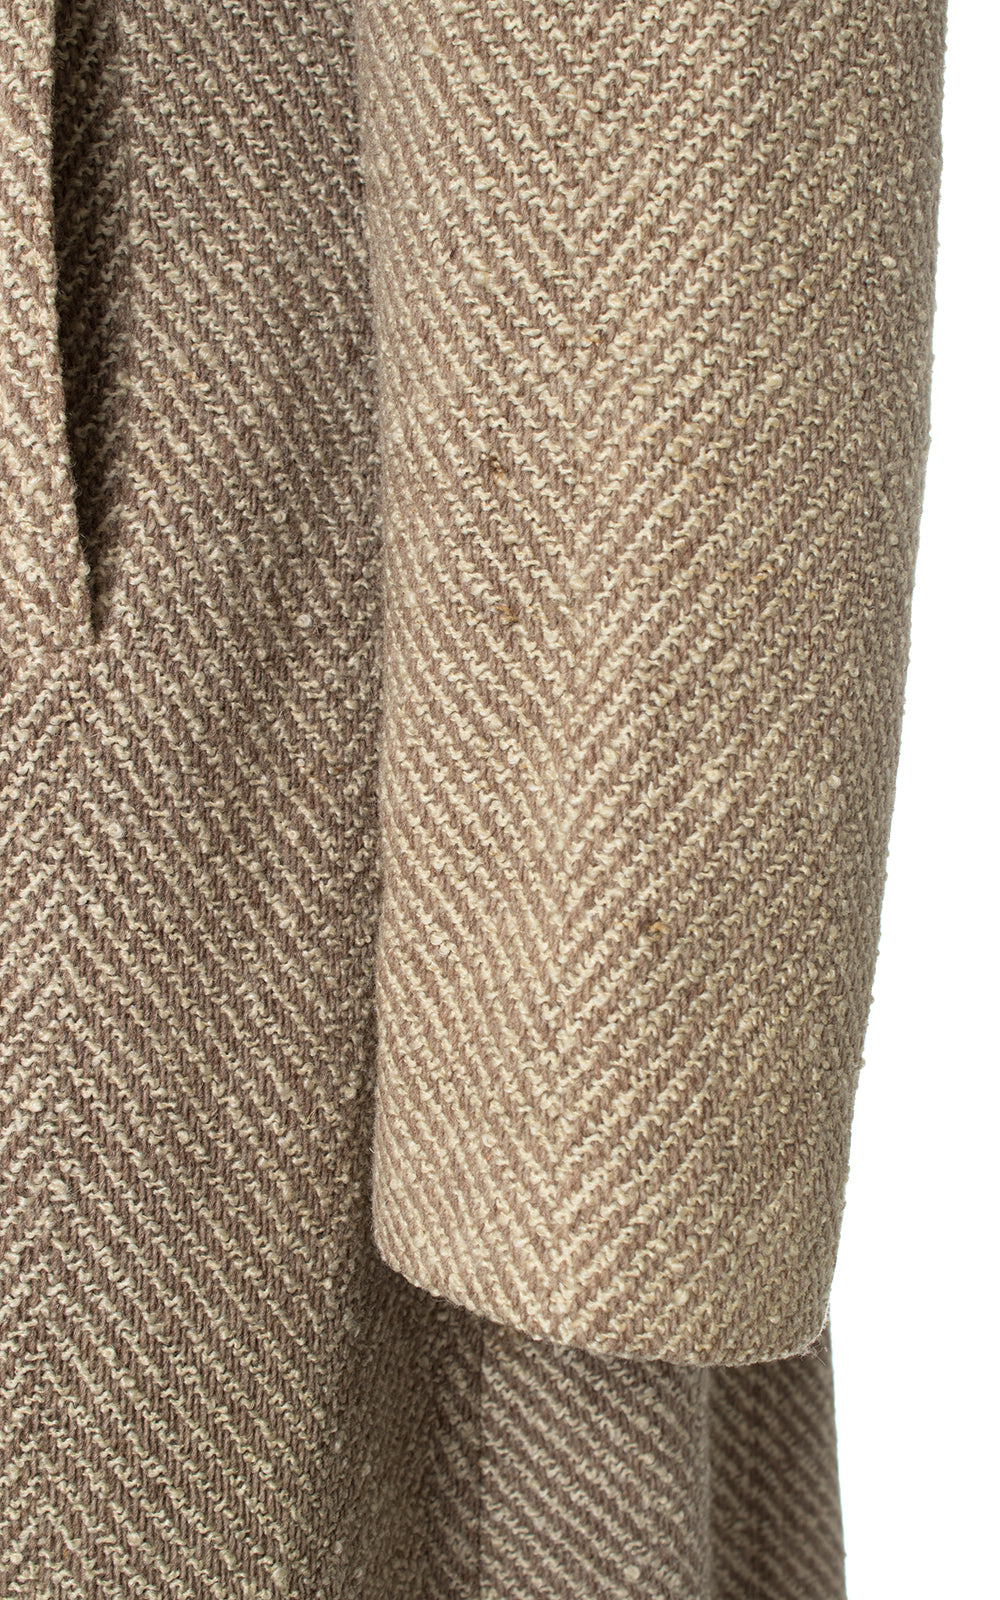 1940s Fur Trimmed Wool Coat